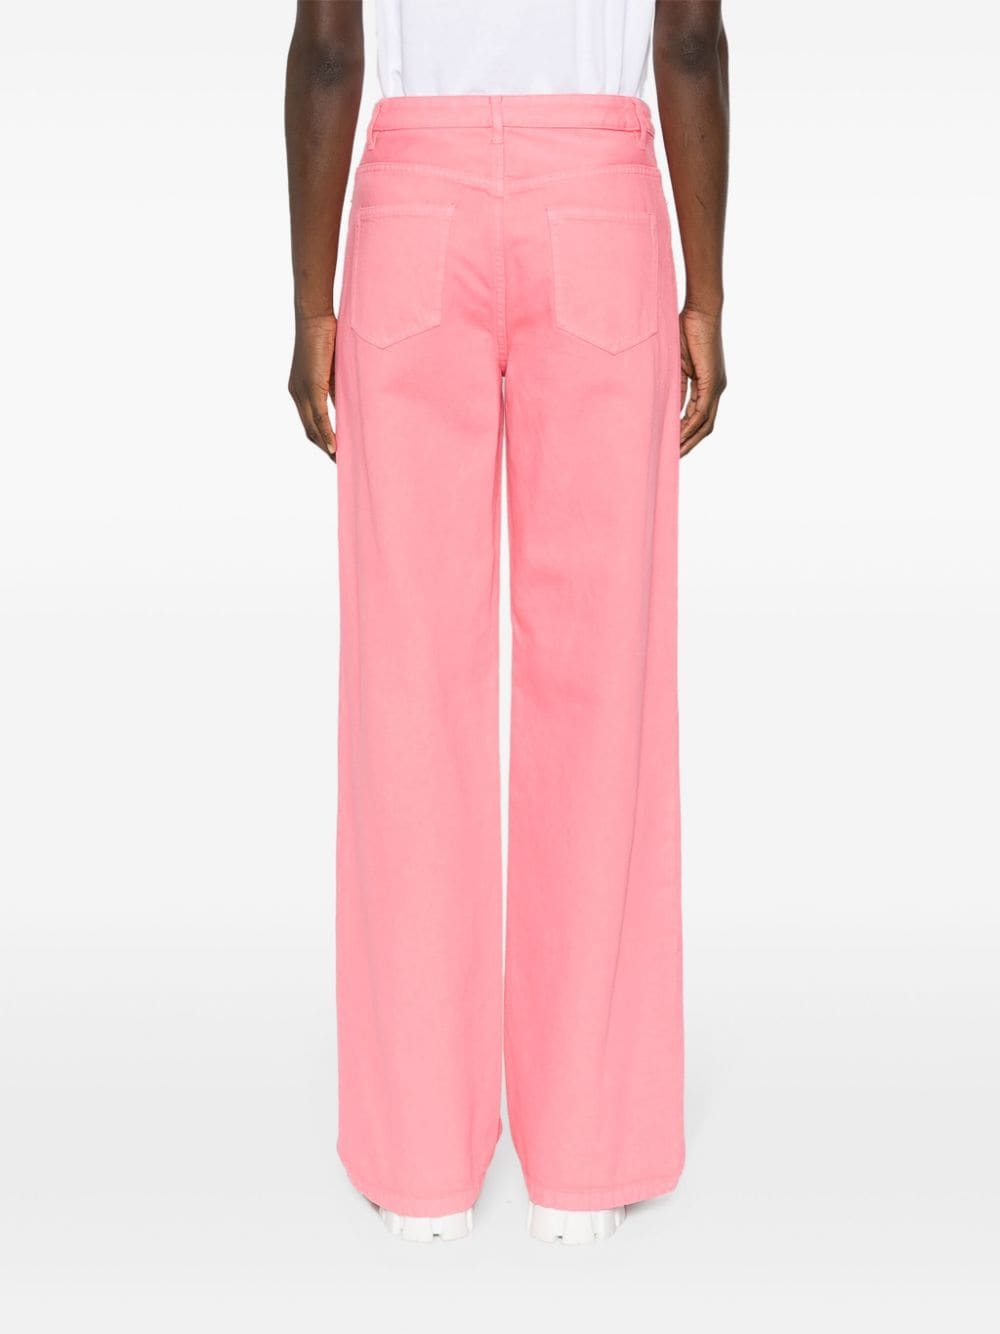 Hot pink cotton denim trousers